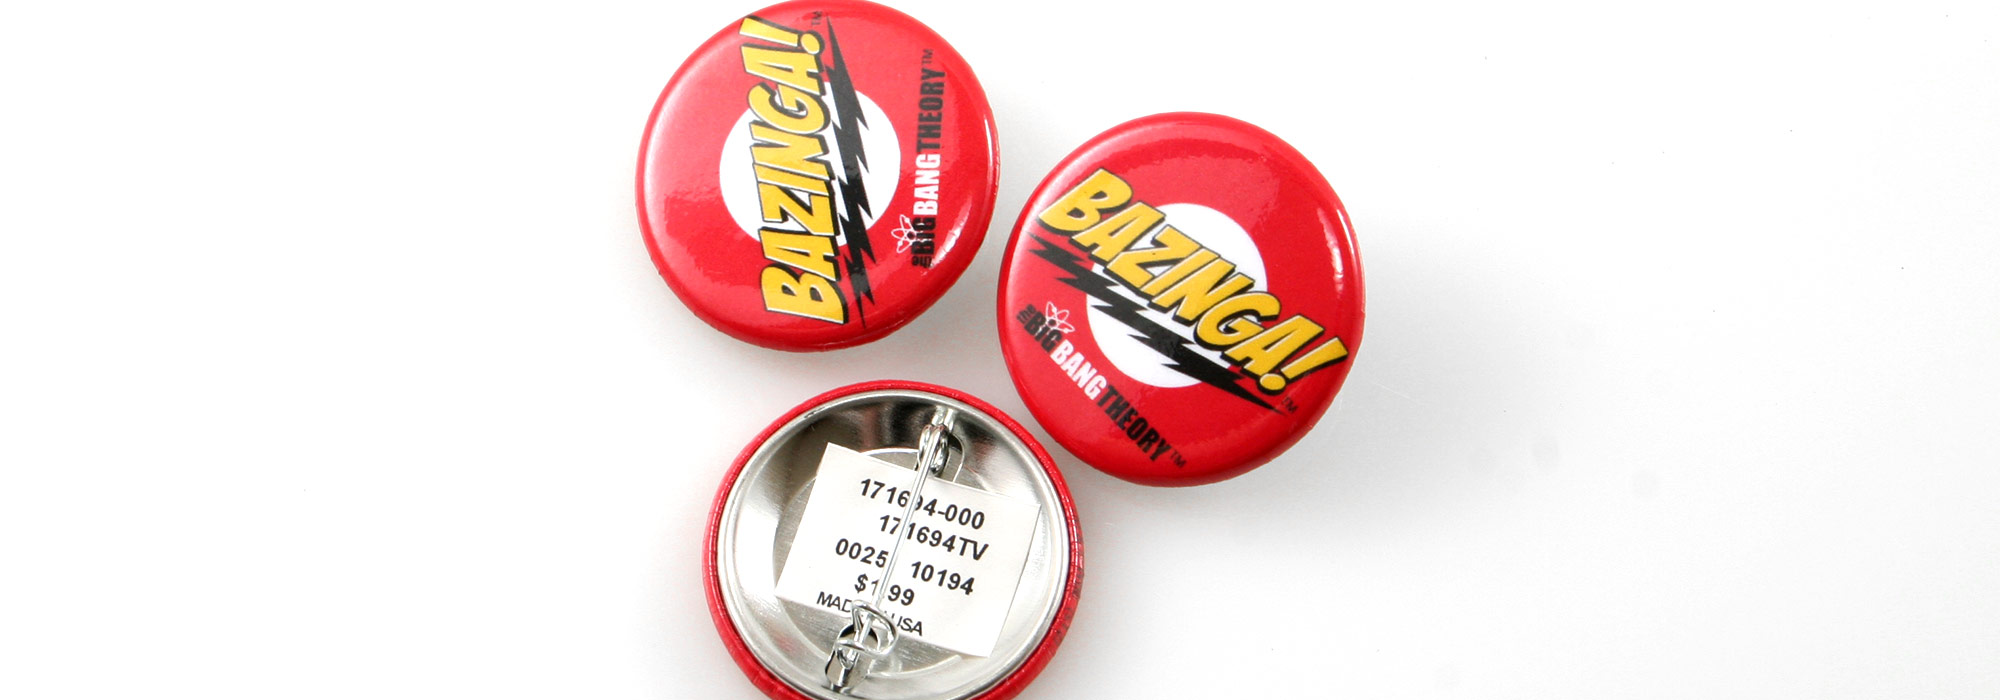 2.25 Pin Badge Custom Button Custom Wedding Favor Pin Back Button Buttons in Bulk Pin Badge Bulk Buttons Custom Party Favor